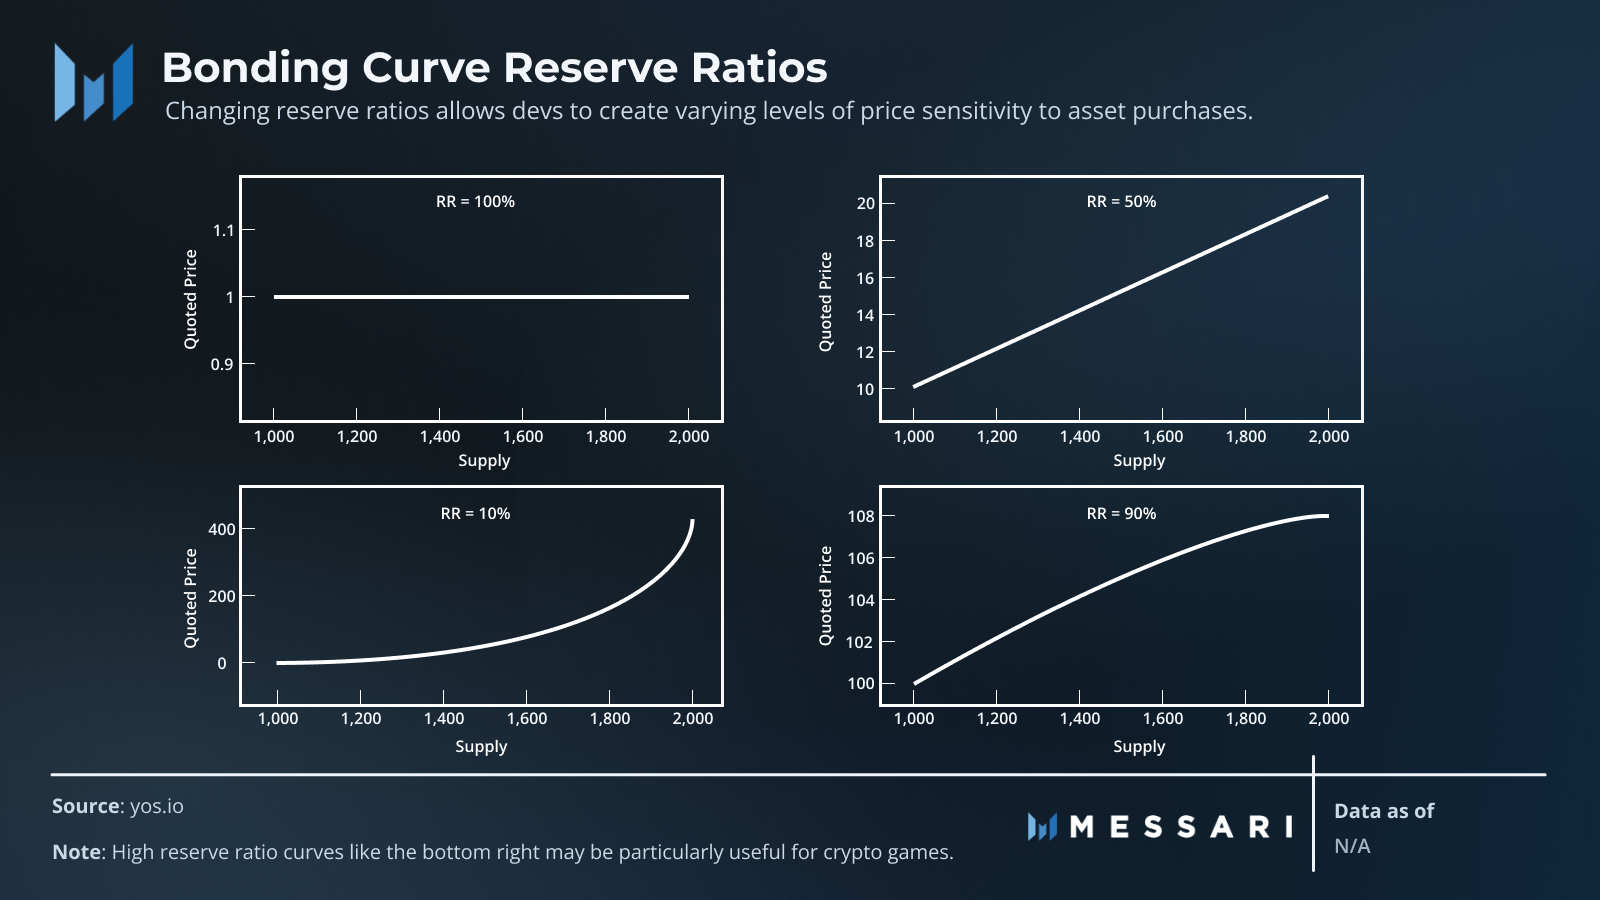 Bonding Curve Reserve Ratios